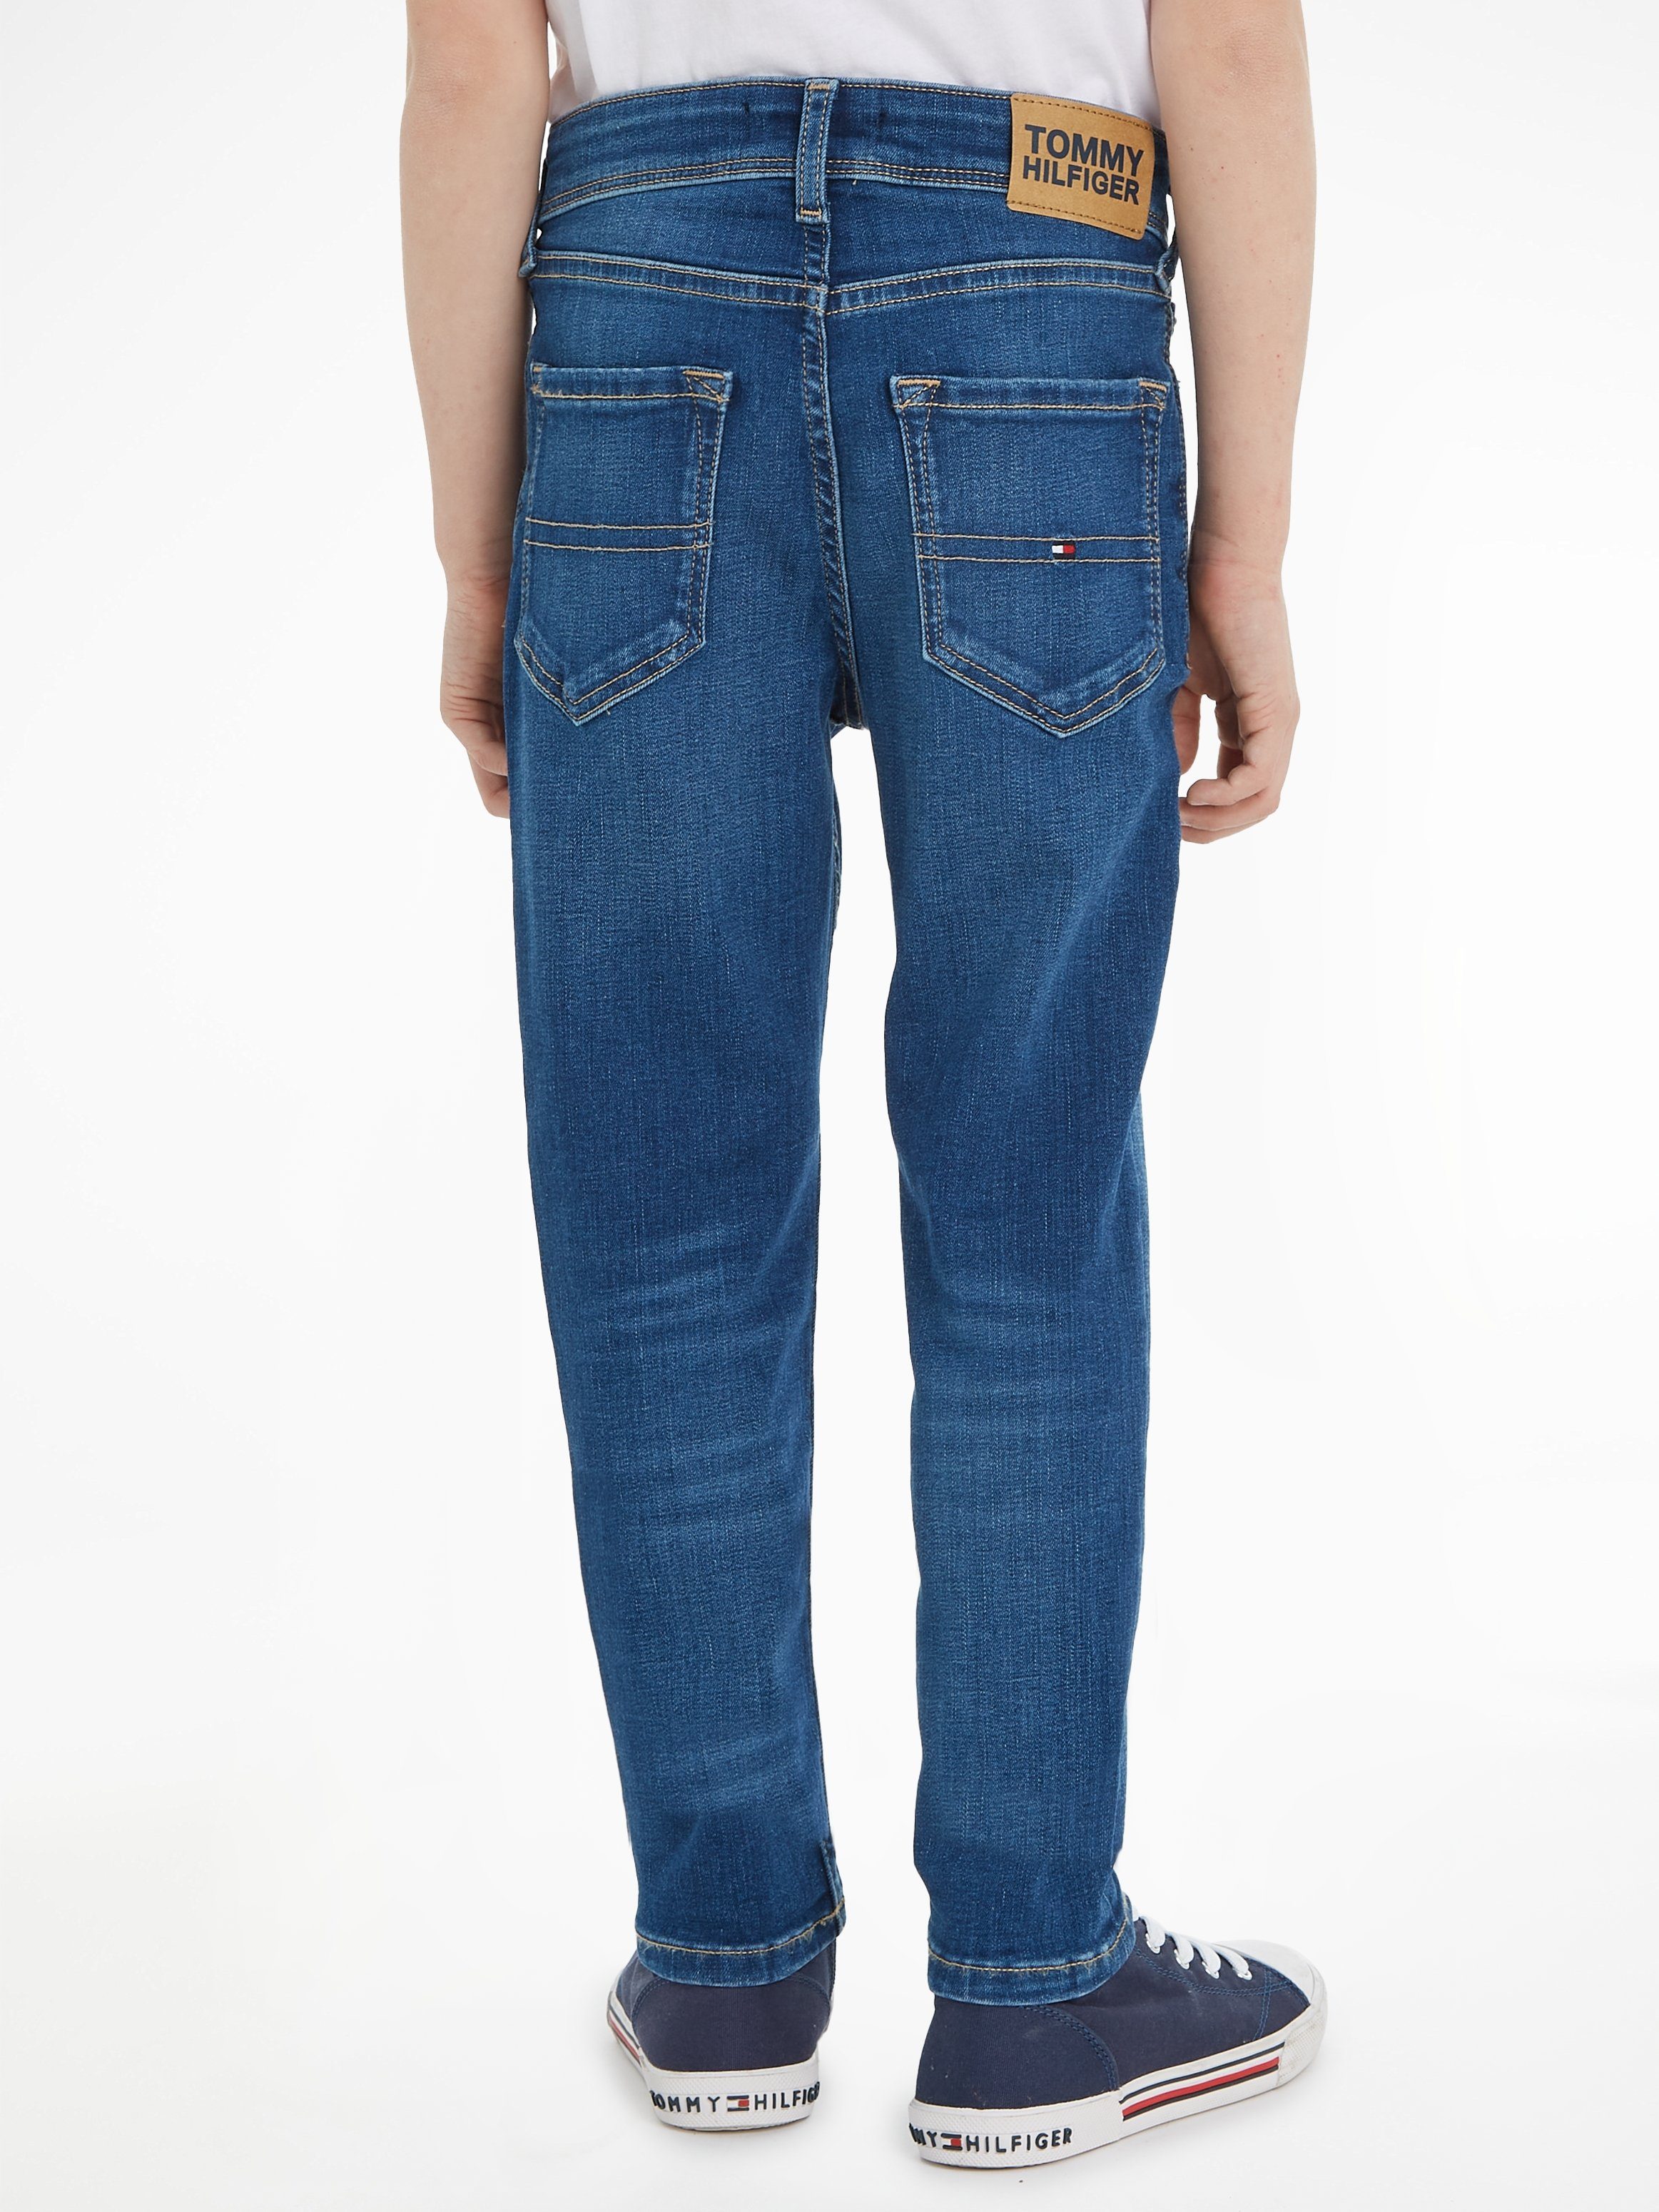 Tommy Hilfiger Stretch-Jeans SCANTON Y, Jeans enthält 20% recycelte  Baumwolle